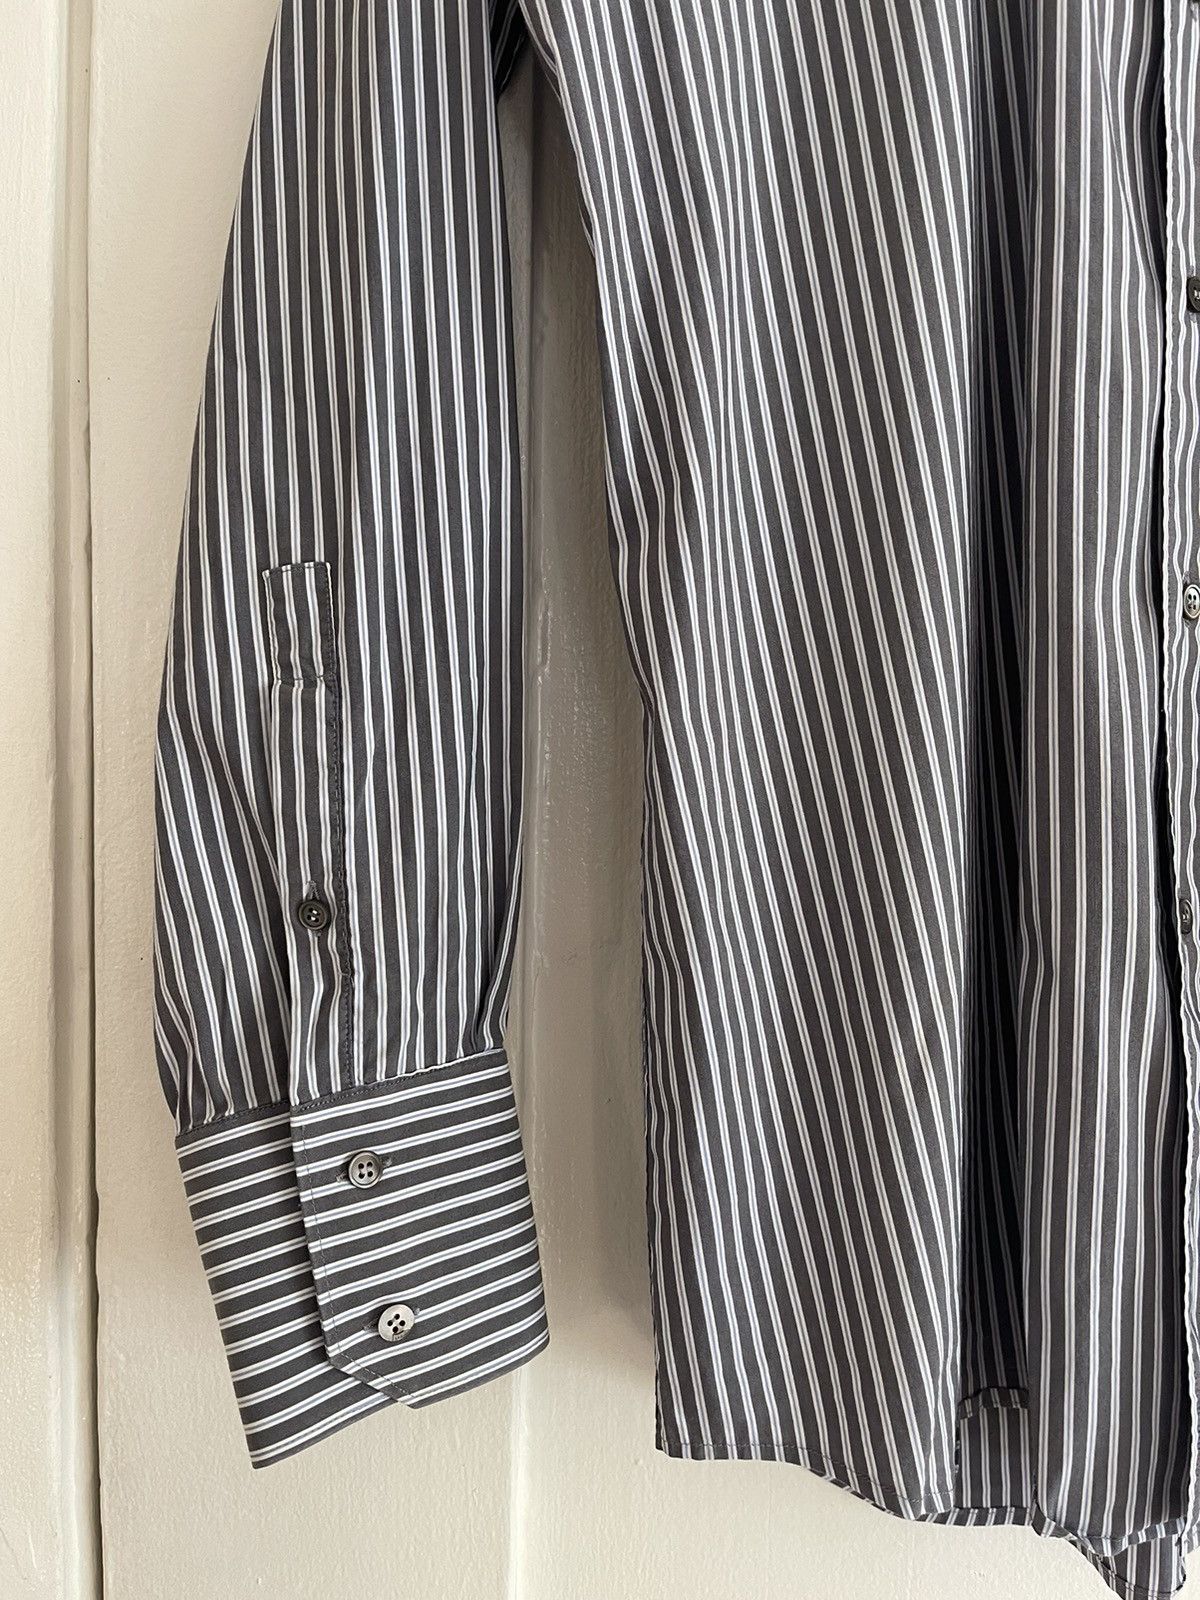 Miu Miu Miu Miu Grey/White/Blue Stripe Button-up Shirt Size XS / US 0-2 / IT 36-38 - 3 Thumbnail